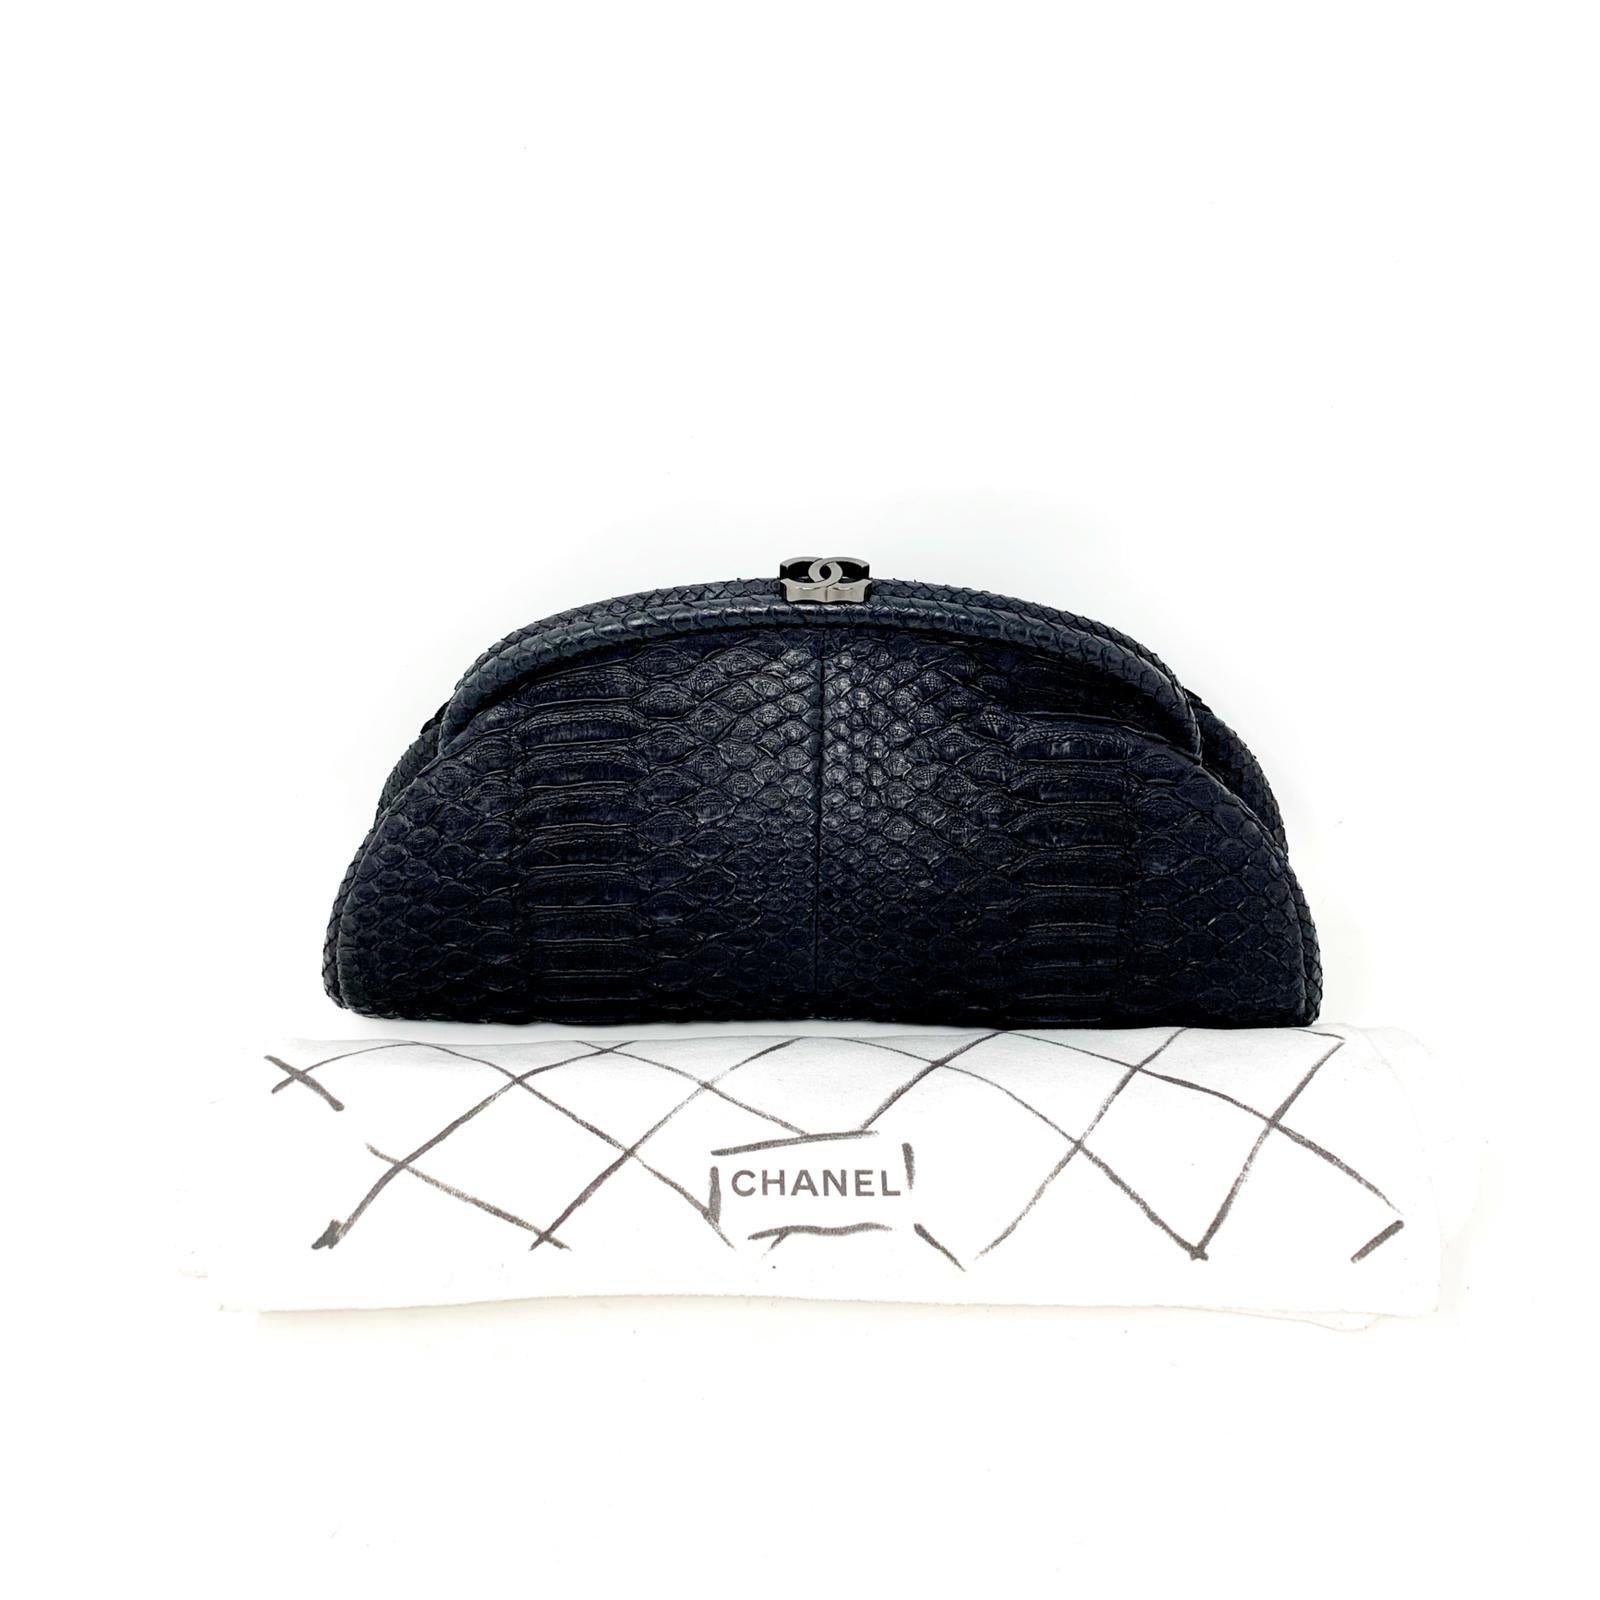 Chanel Black Python Leather Timeless Clutch, 2011 4